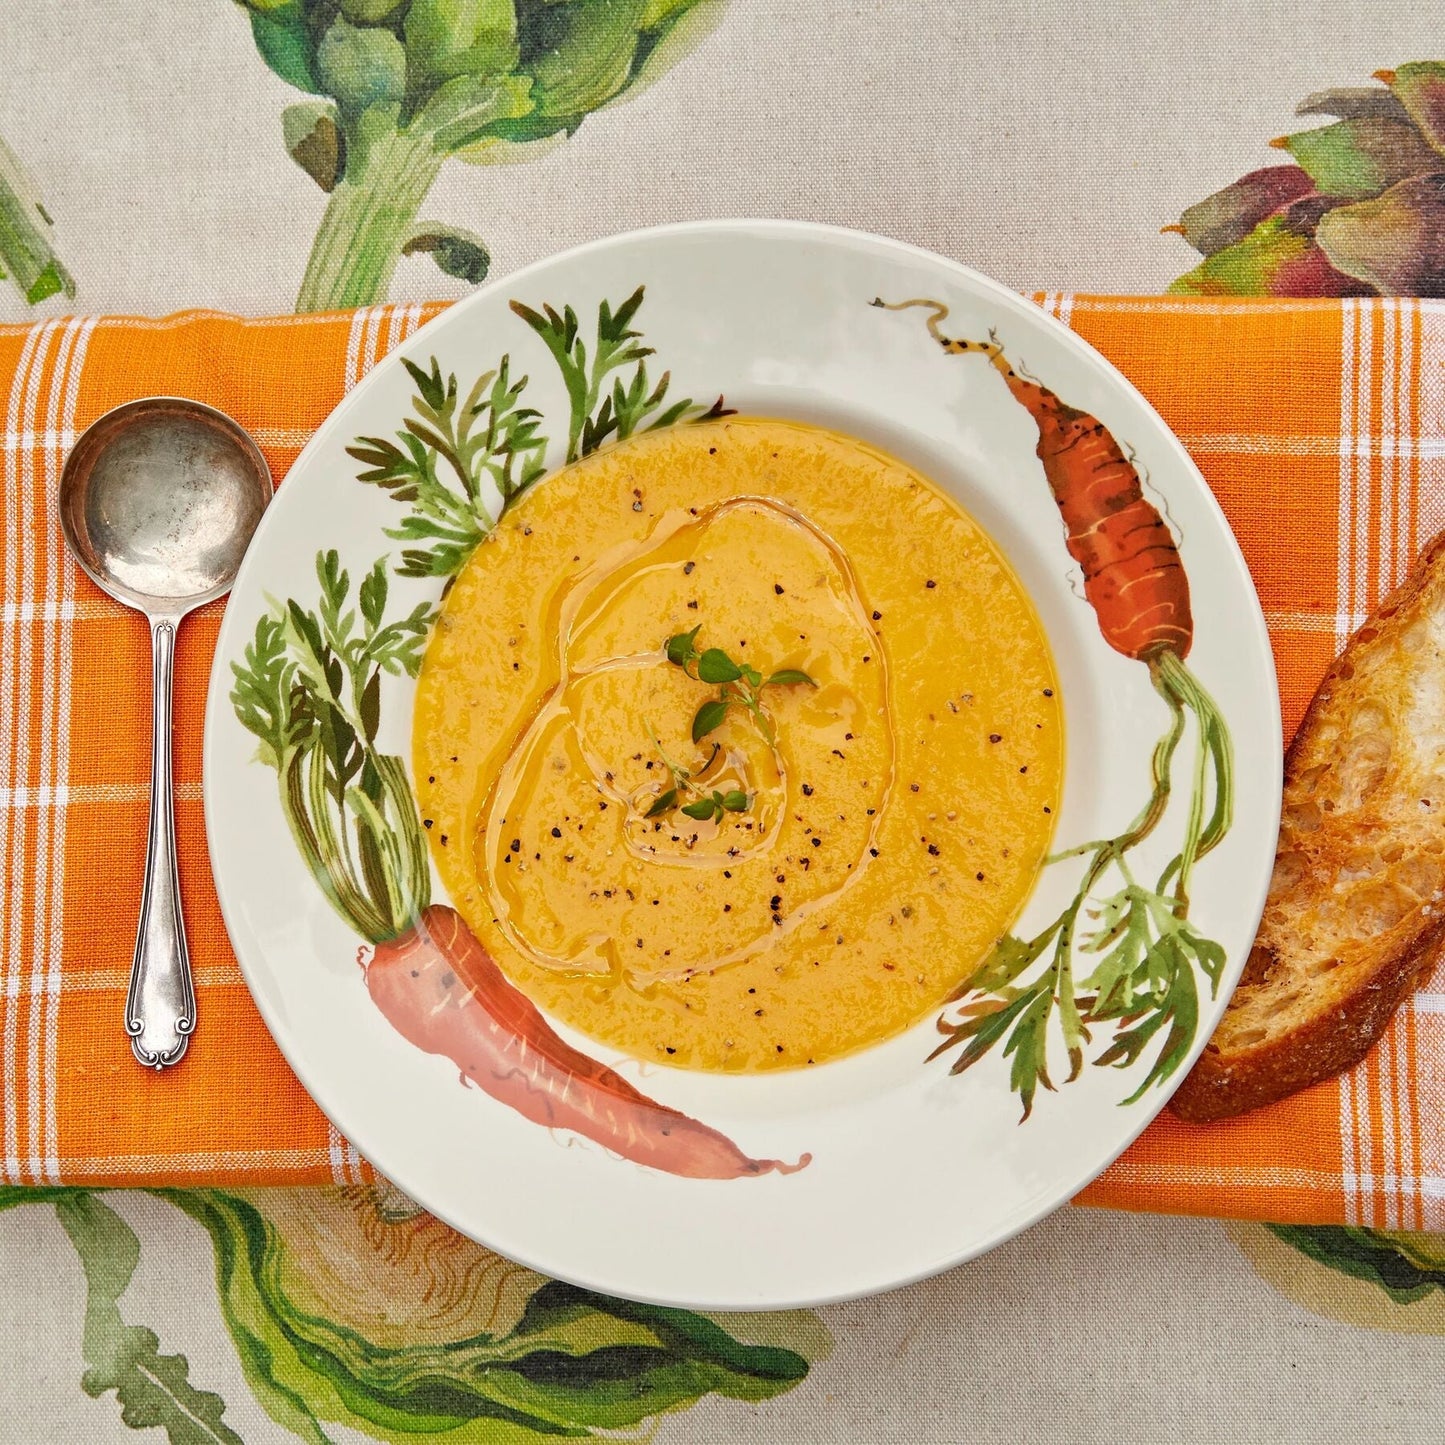 Vegetable Garden Carrots Soup Plate